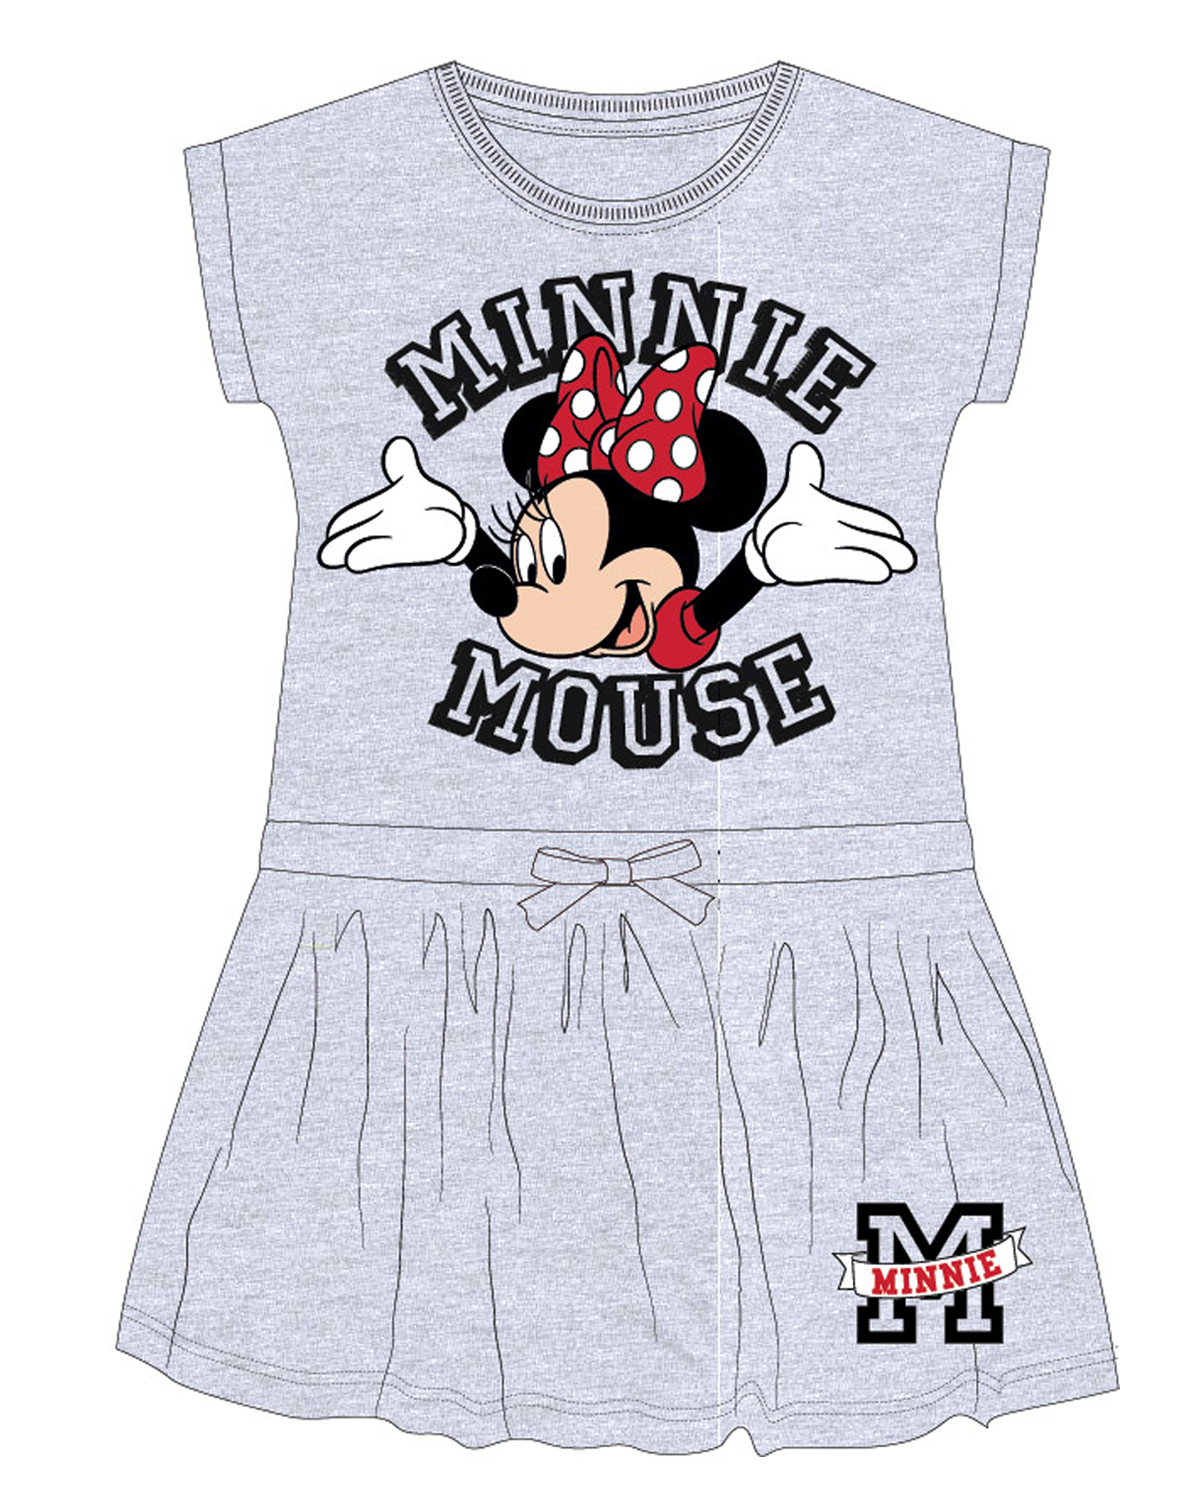 Minnie Mouse - licence Dívčí šaty - Minnie Mouse 52239575, šedý melír Barva: Šedá, Velikost: 104